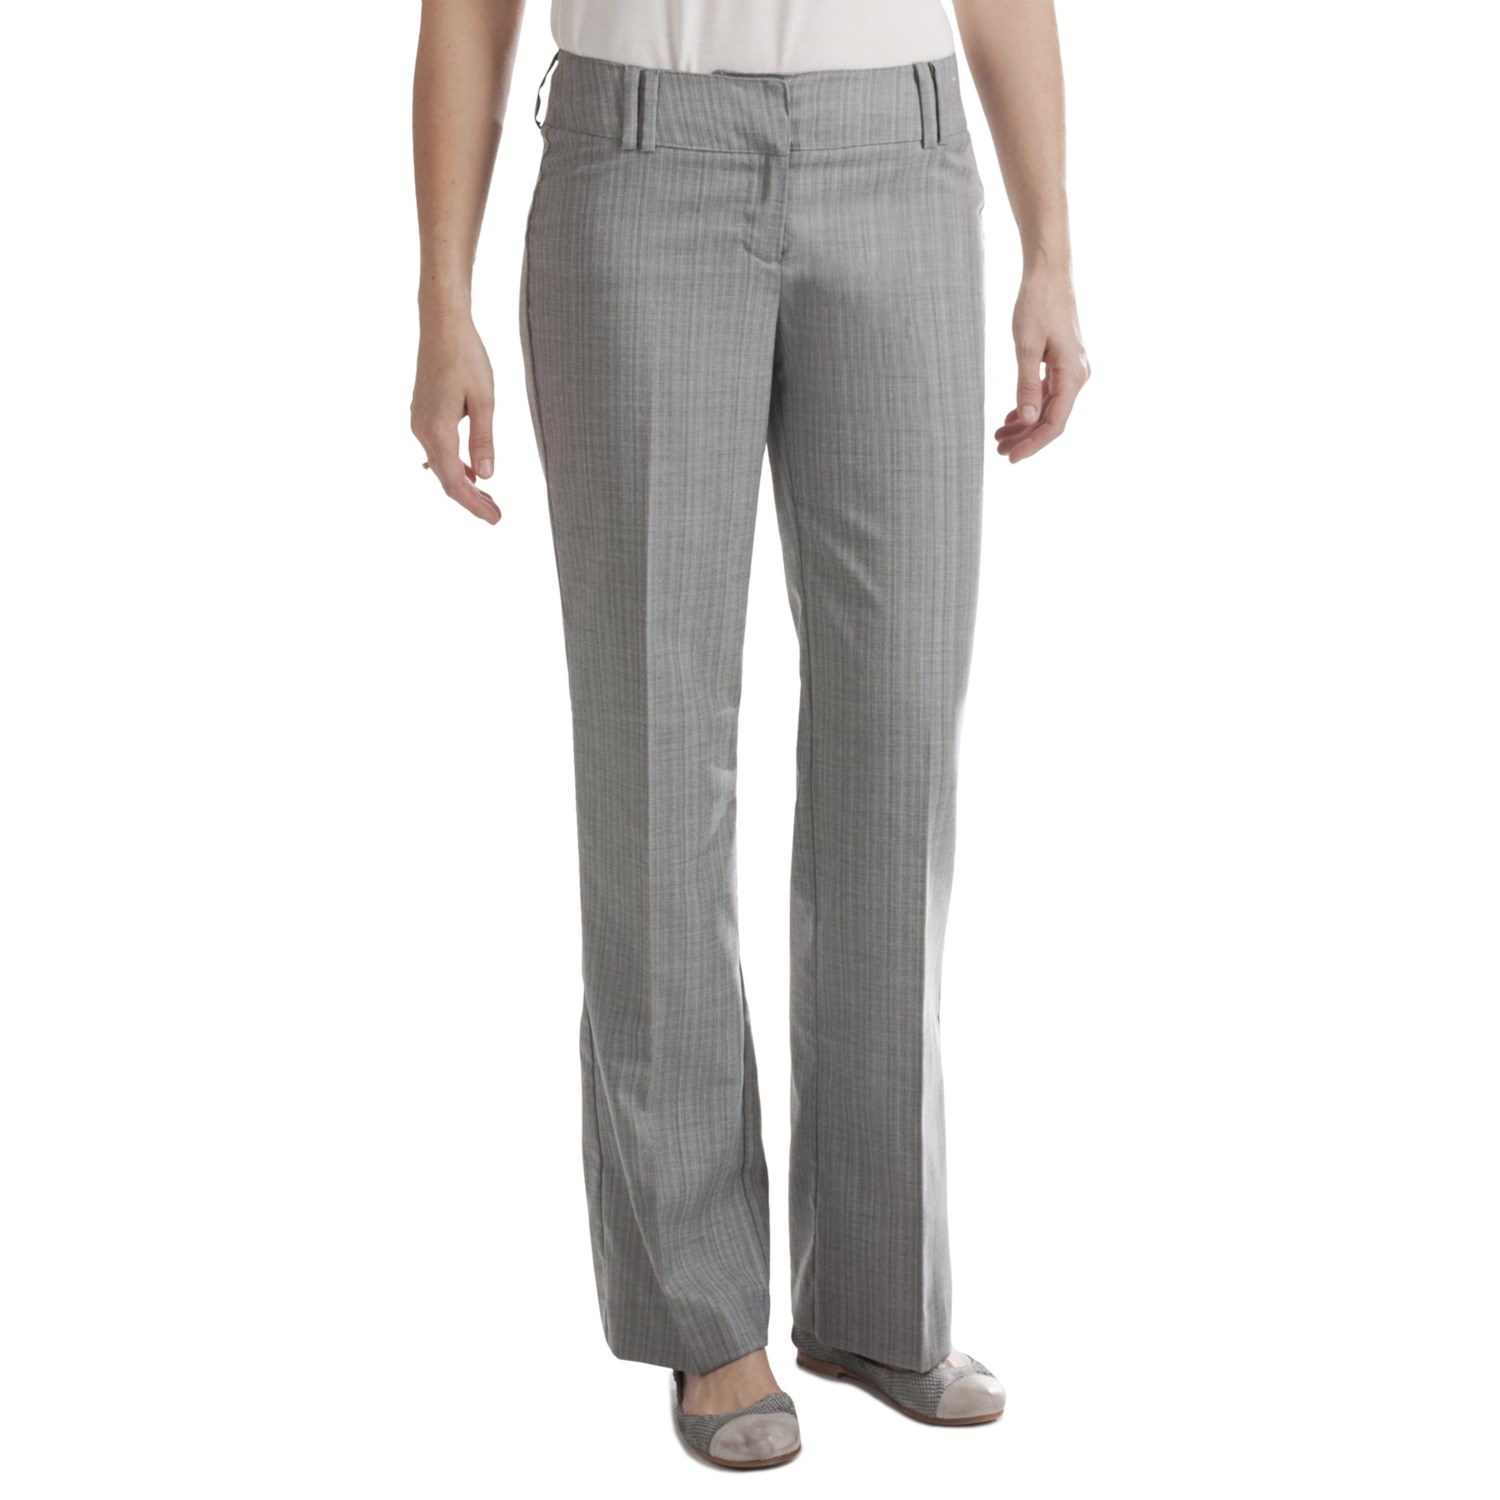 Stretch Broken Stripe Dress Pants (For Women) 5608G - Save 79%